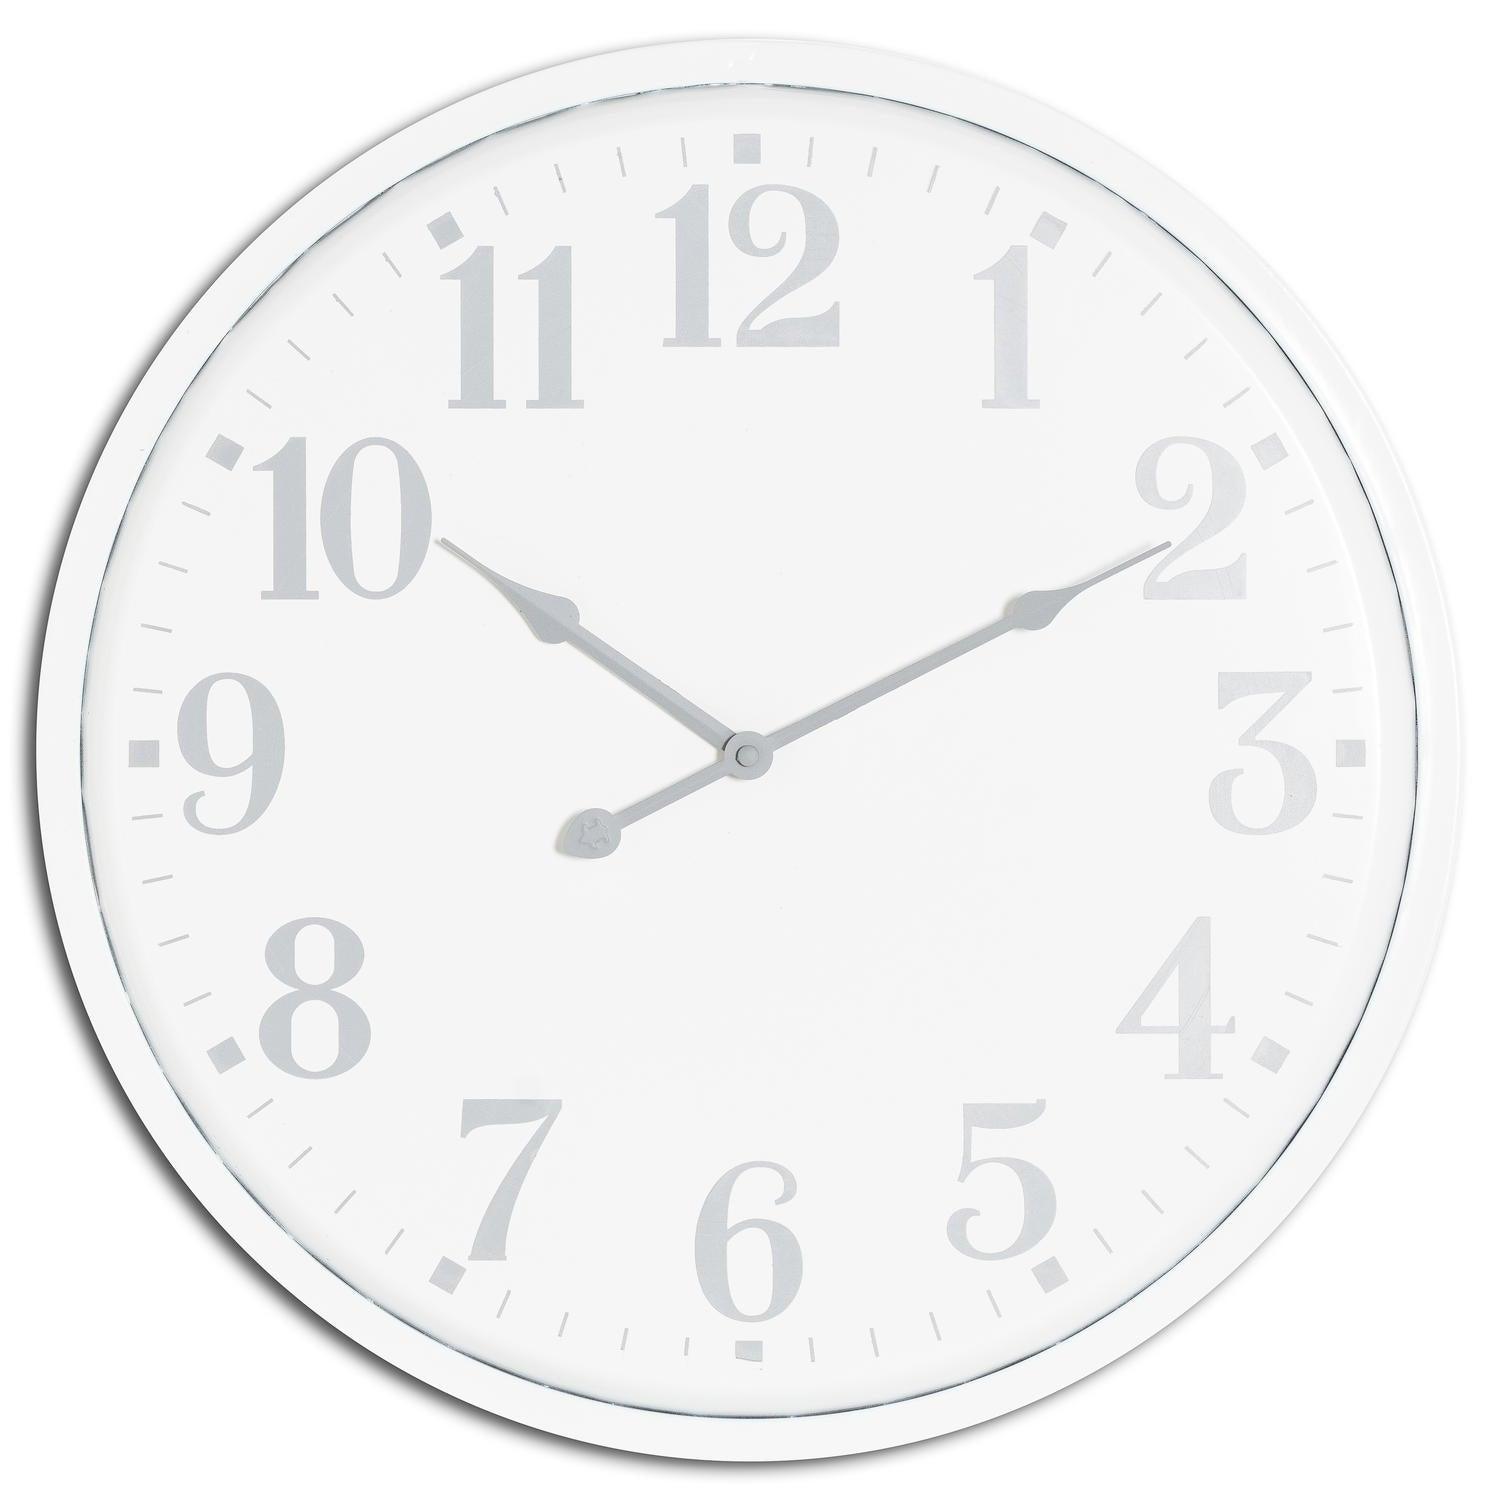 View Aubrey Wall Clock information